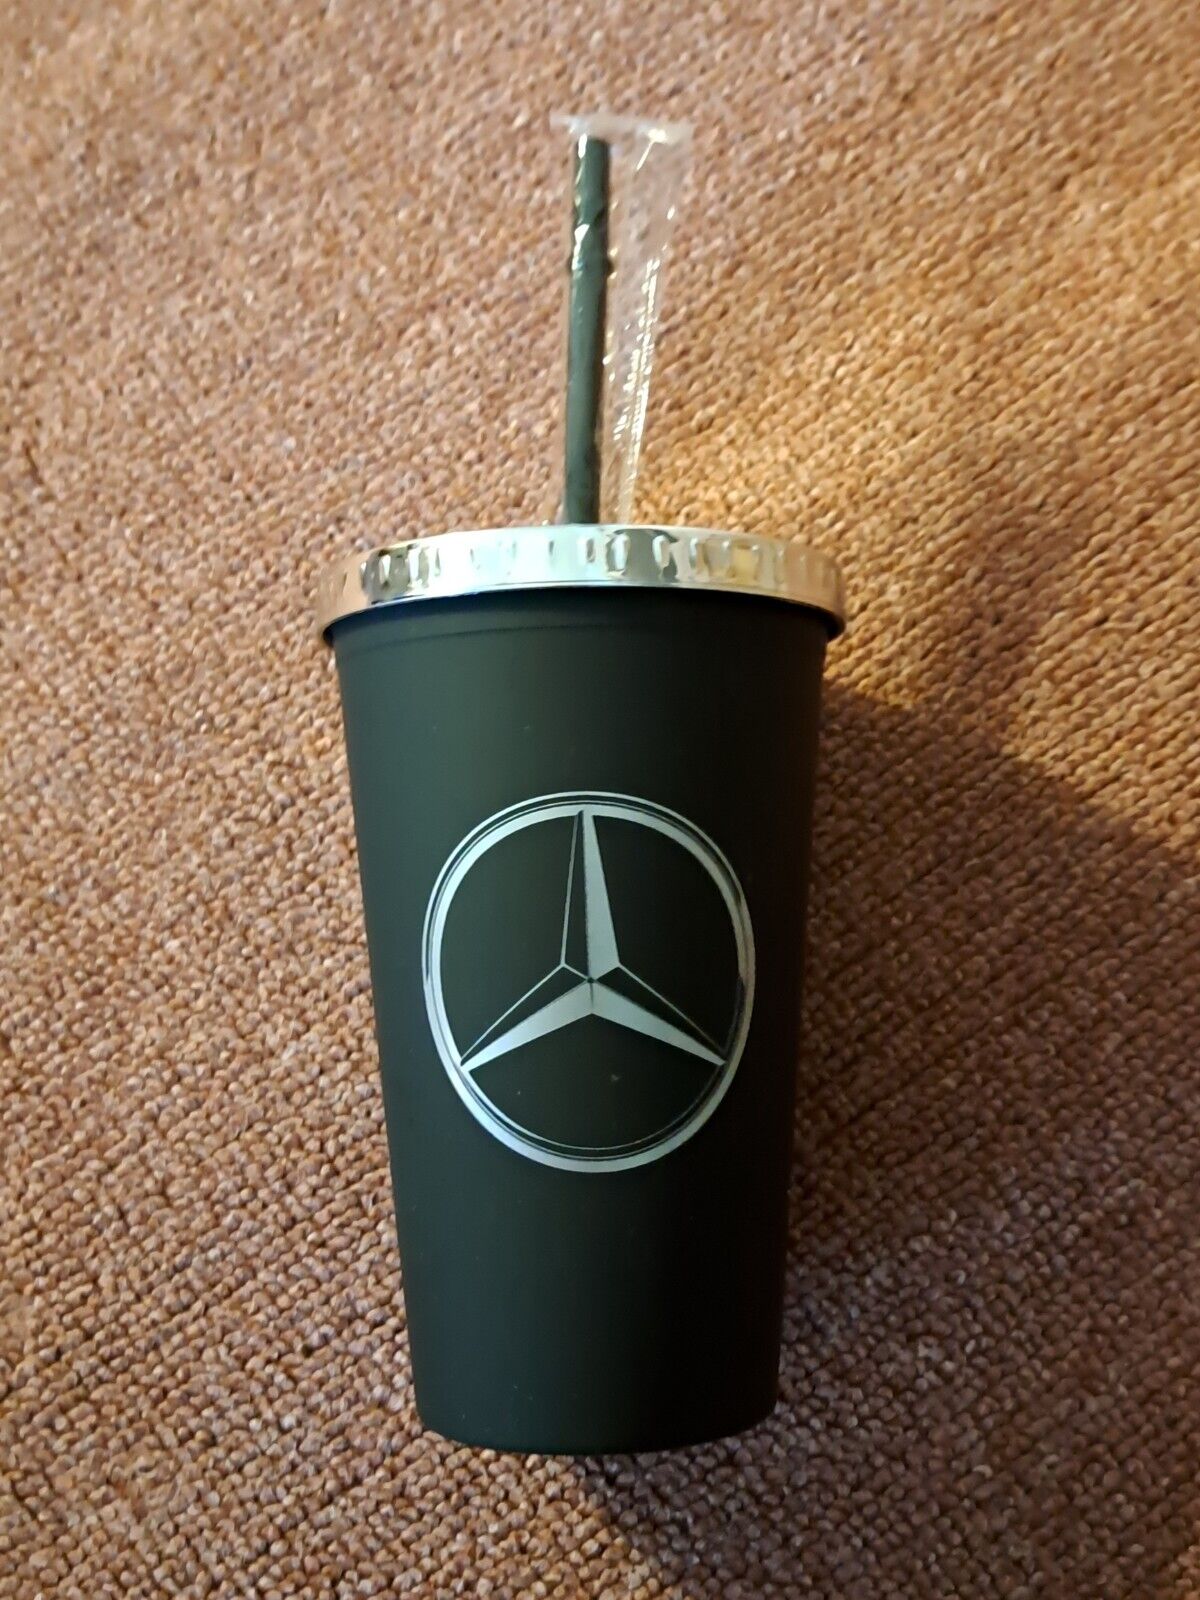 Mercedes Benz BPA Free Travel Mug & Tumbler with Original Certificate - New